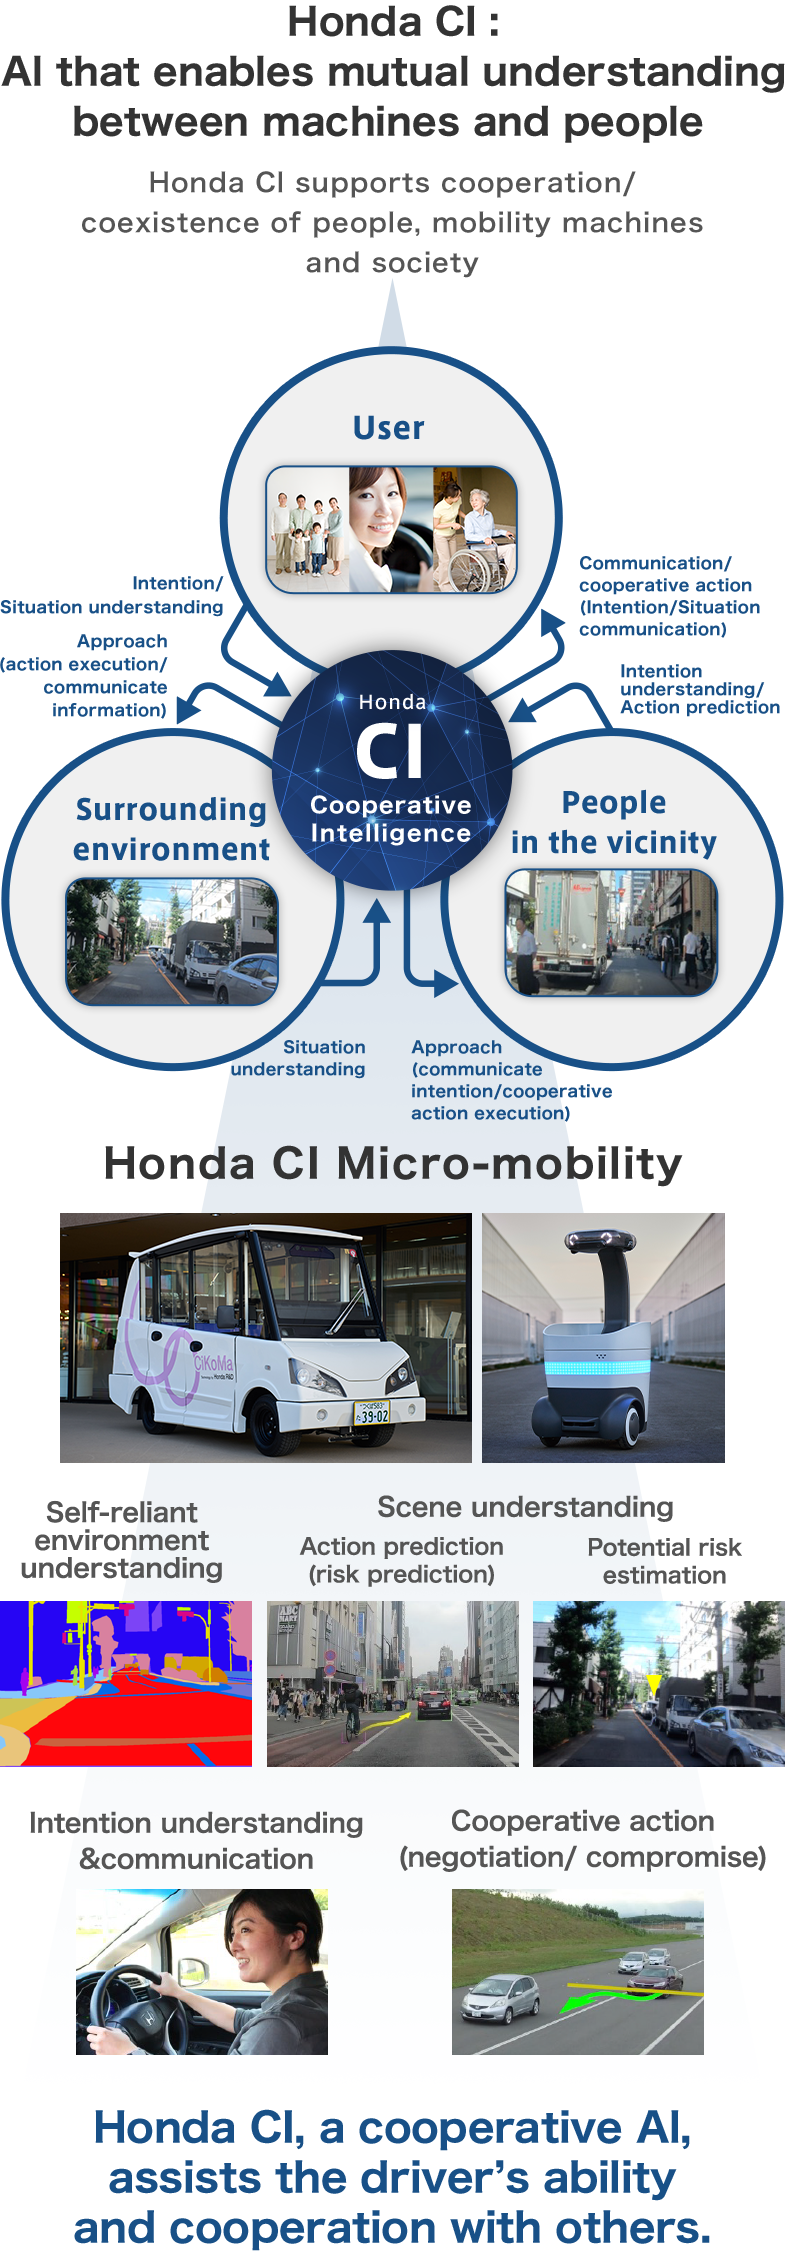 Honda CI: Al that enables mutual understanding between machines and people